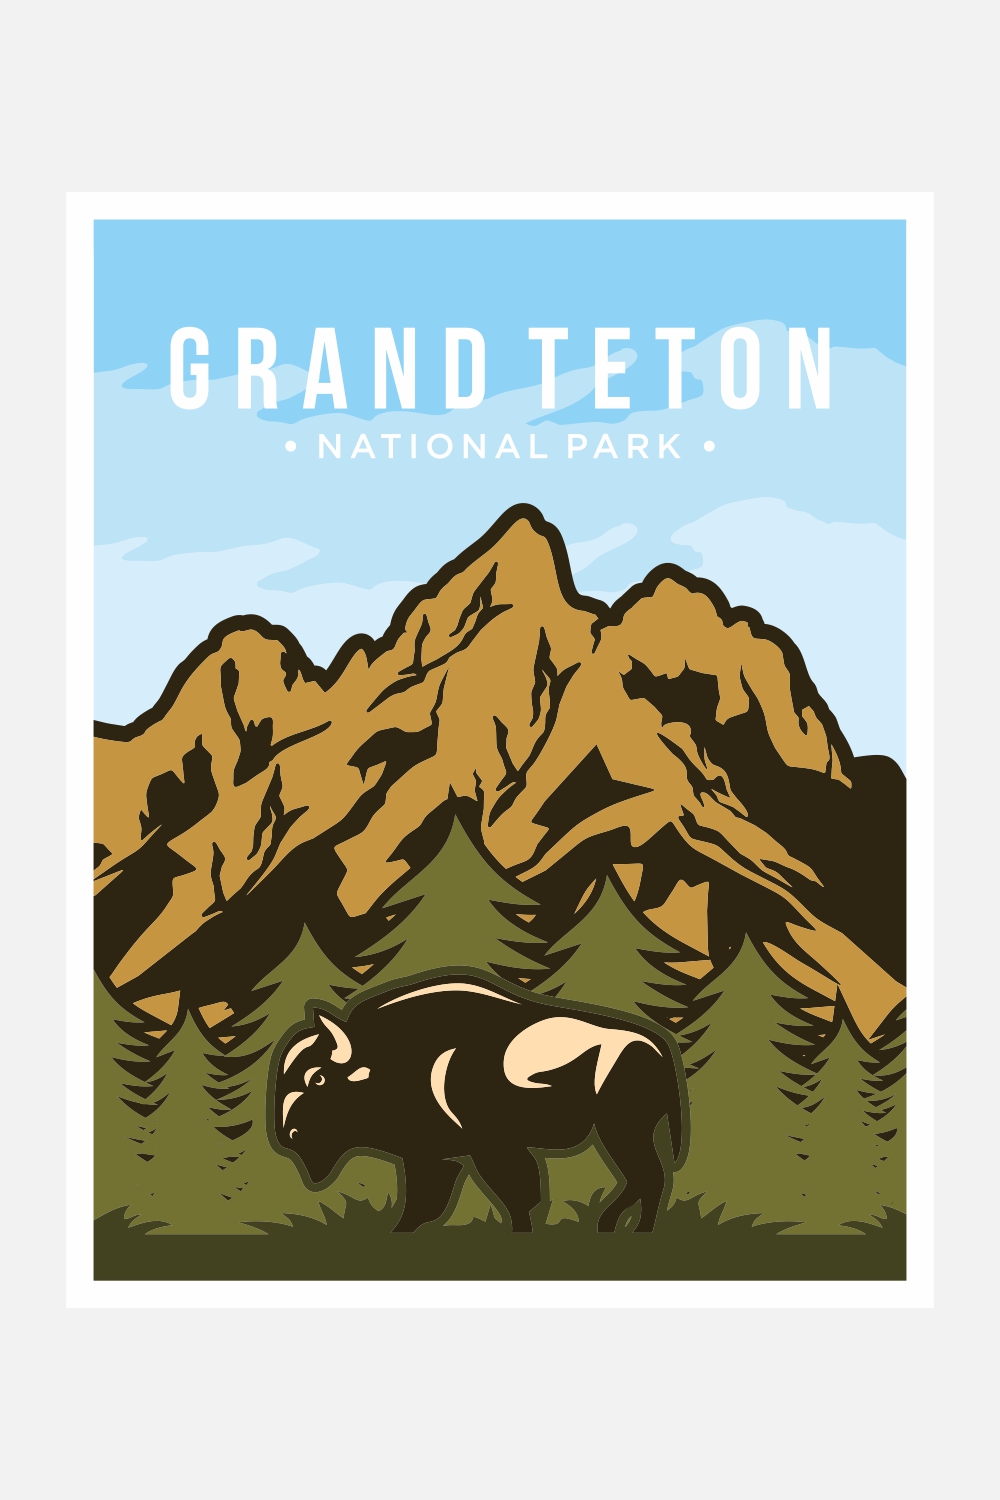 Grand Teton National Park Poster Vector Illustration - $8 pinterest preview image.